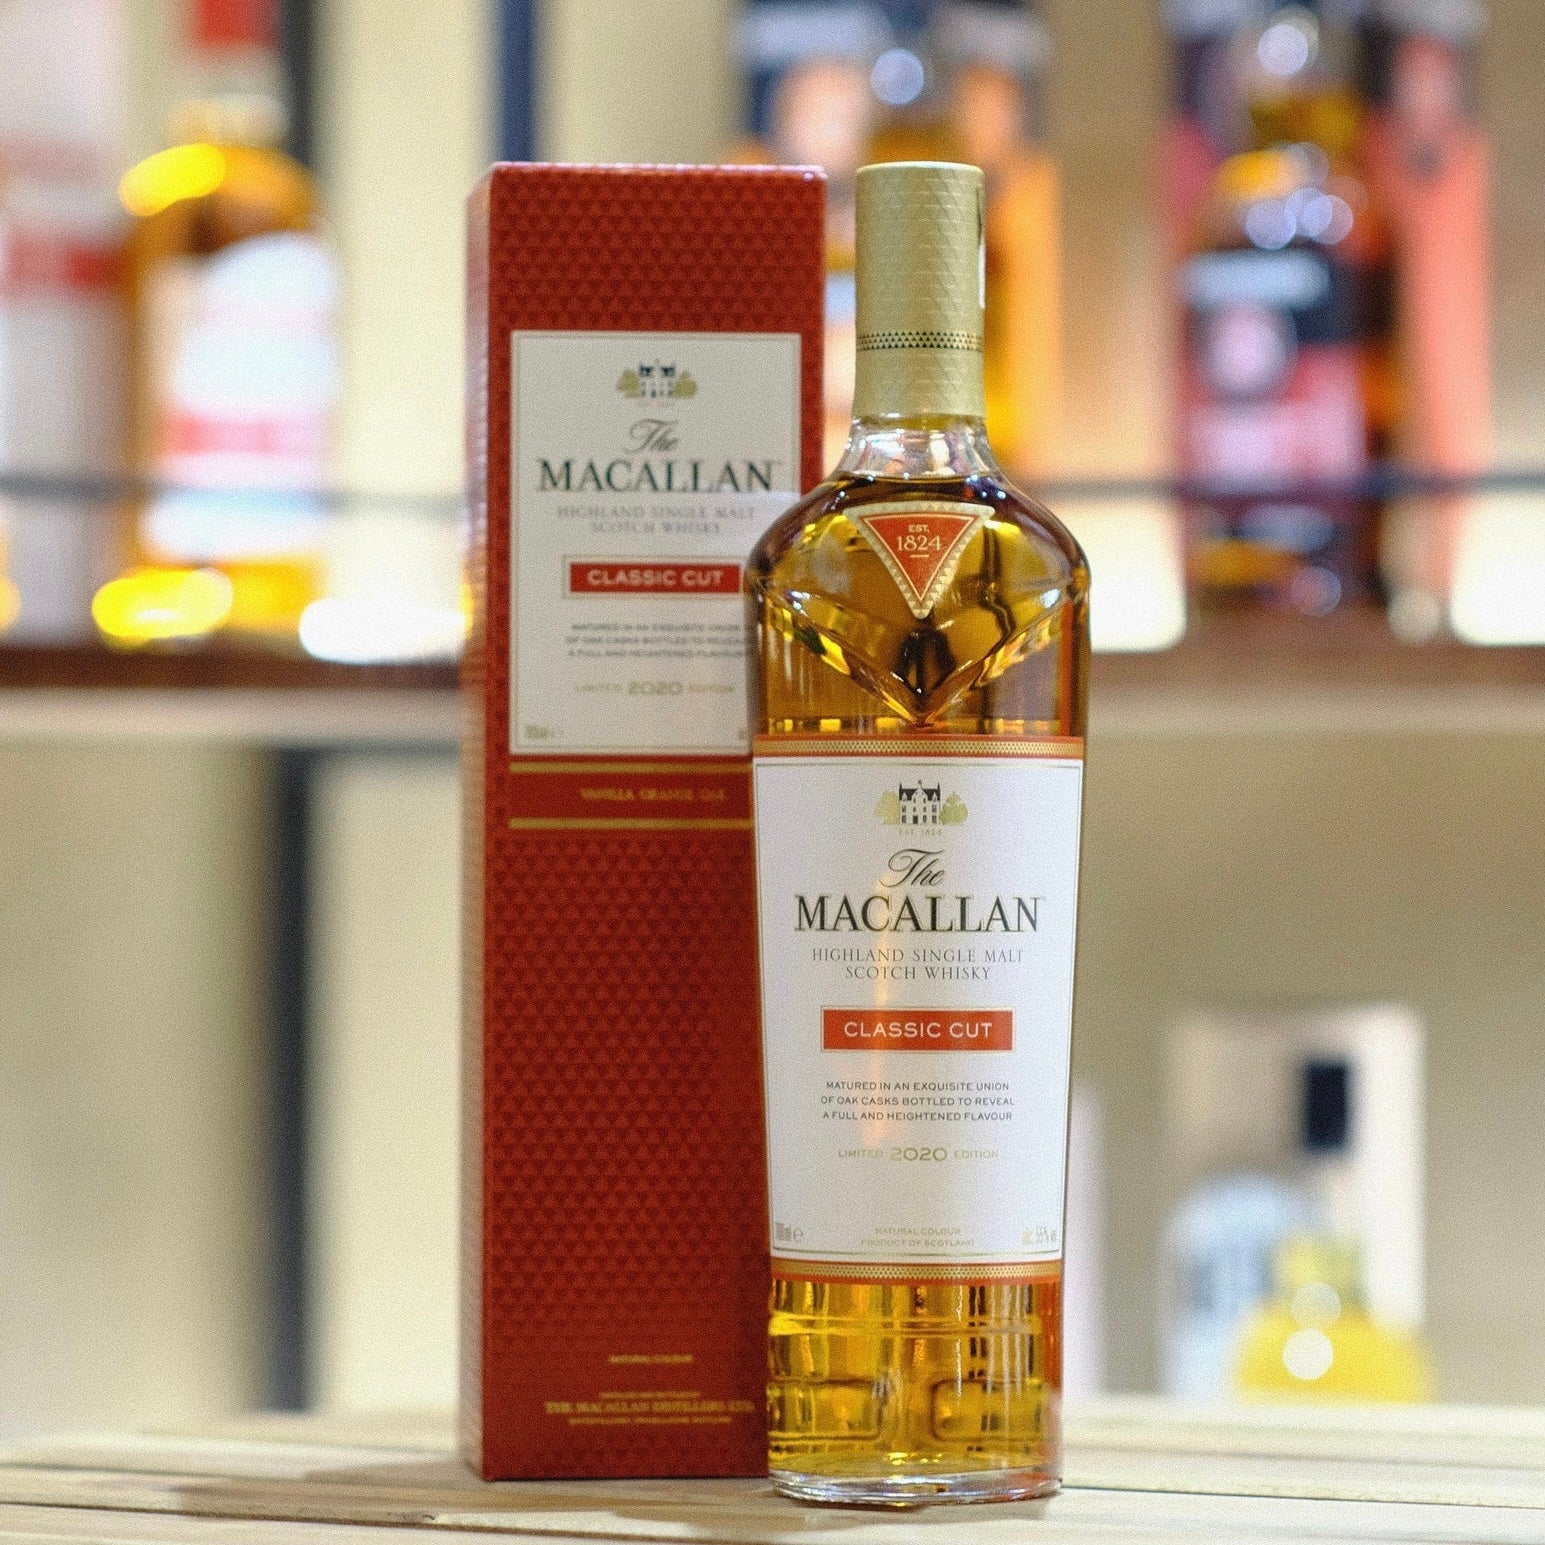 The Macallan Classic Cut 2020 Single Malt Scotch Whisky